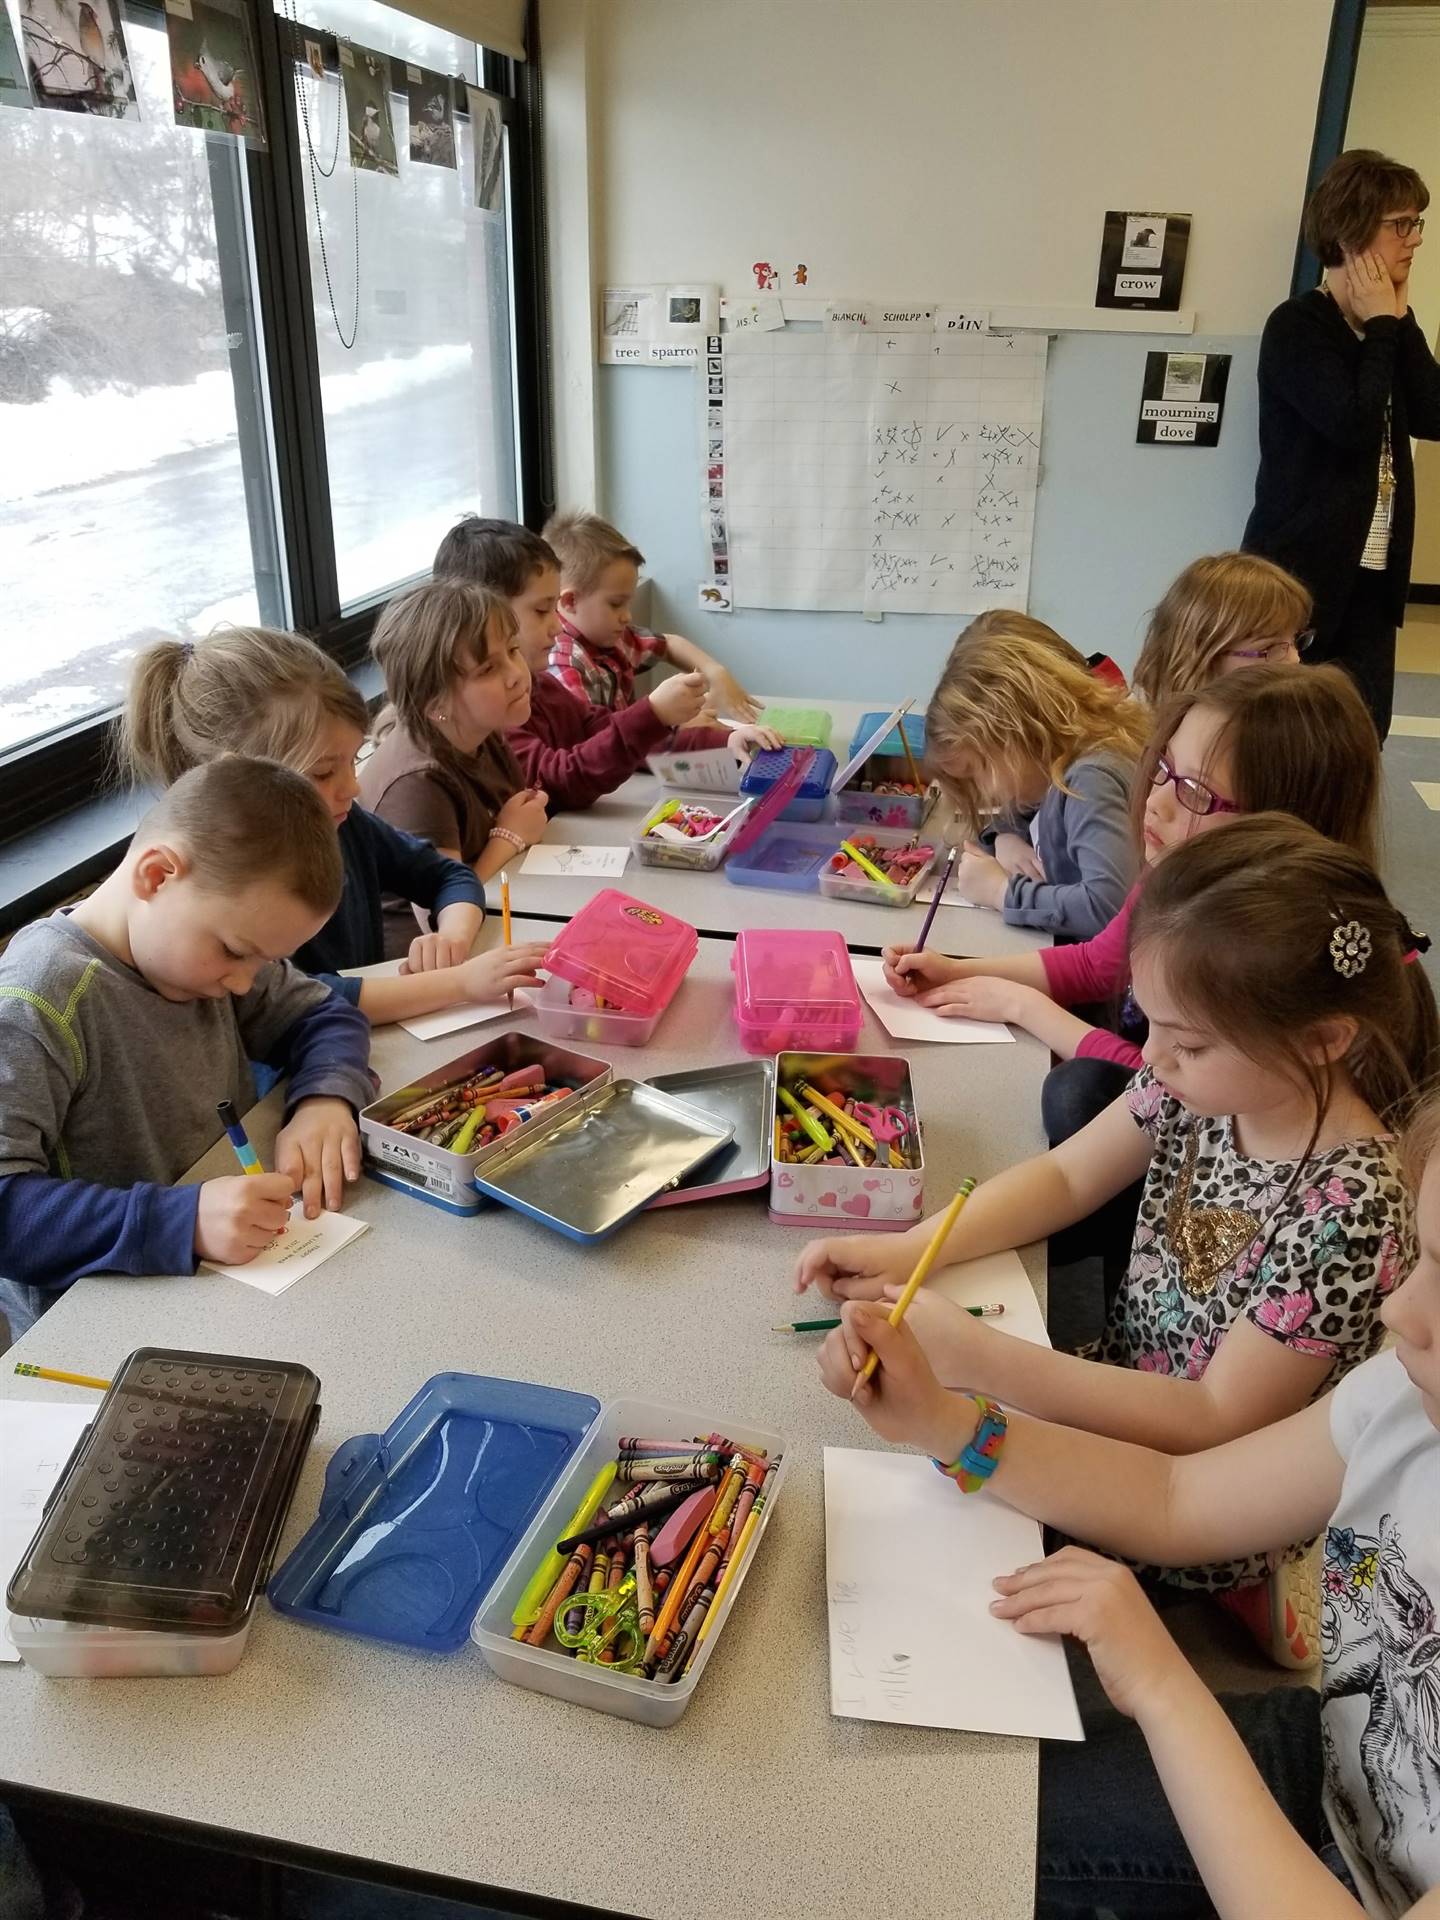 Children coloring